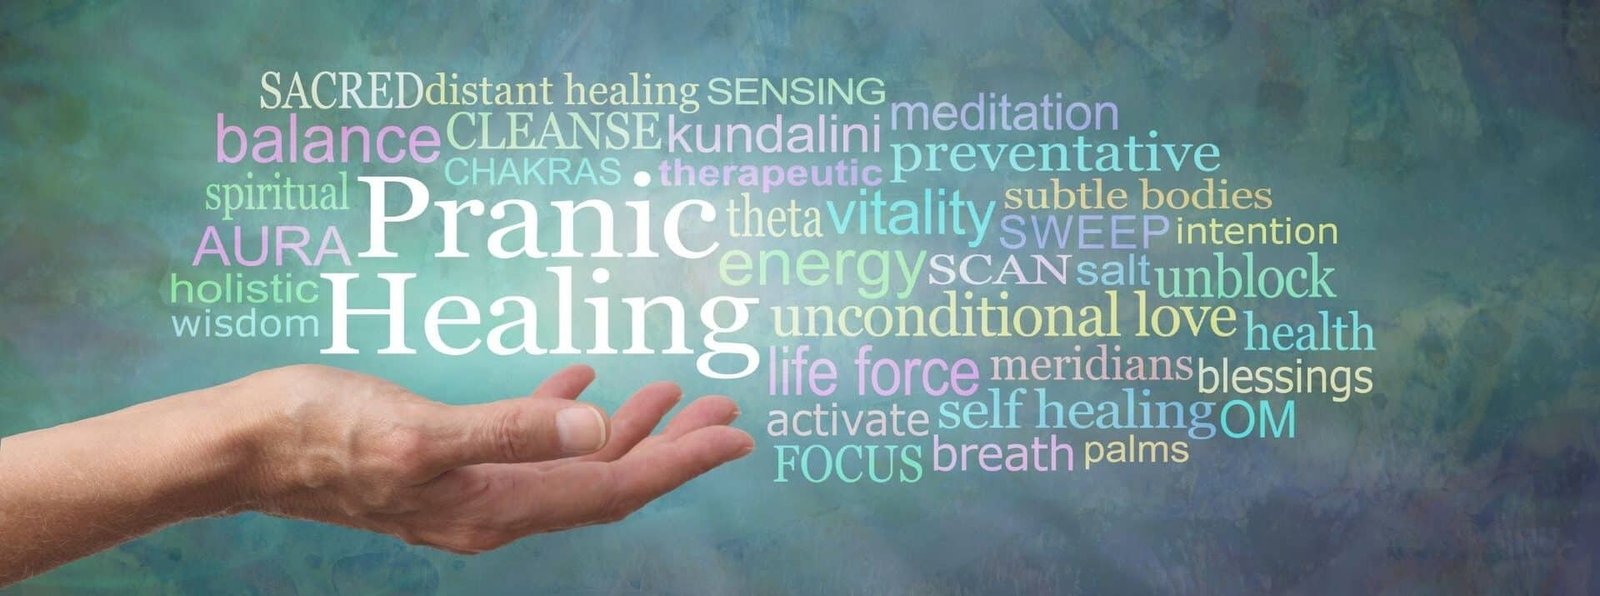 Pranic healing, chakras, distance healing, back pain, treatment, spine, alternative medicine, natural therapy,